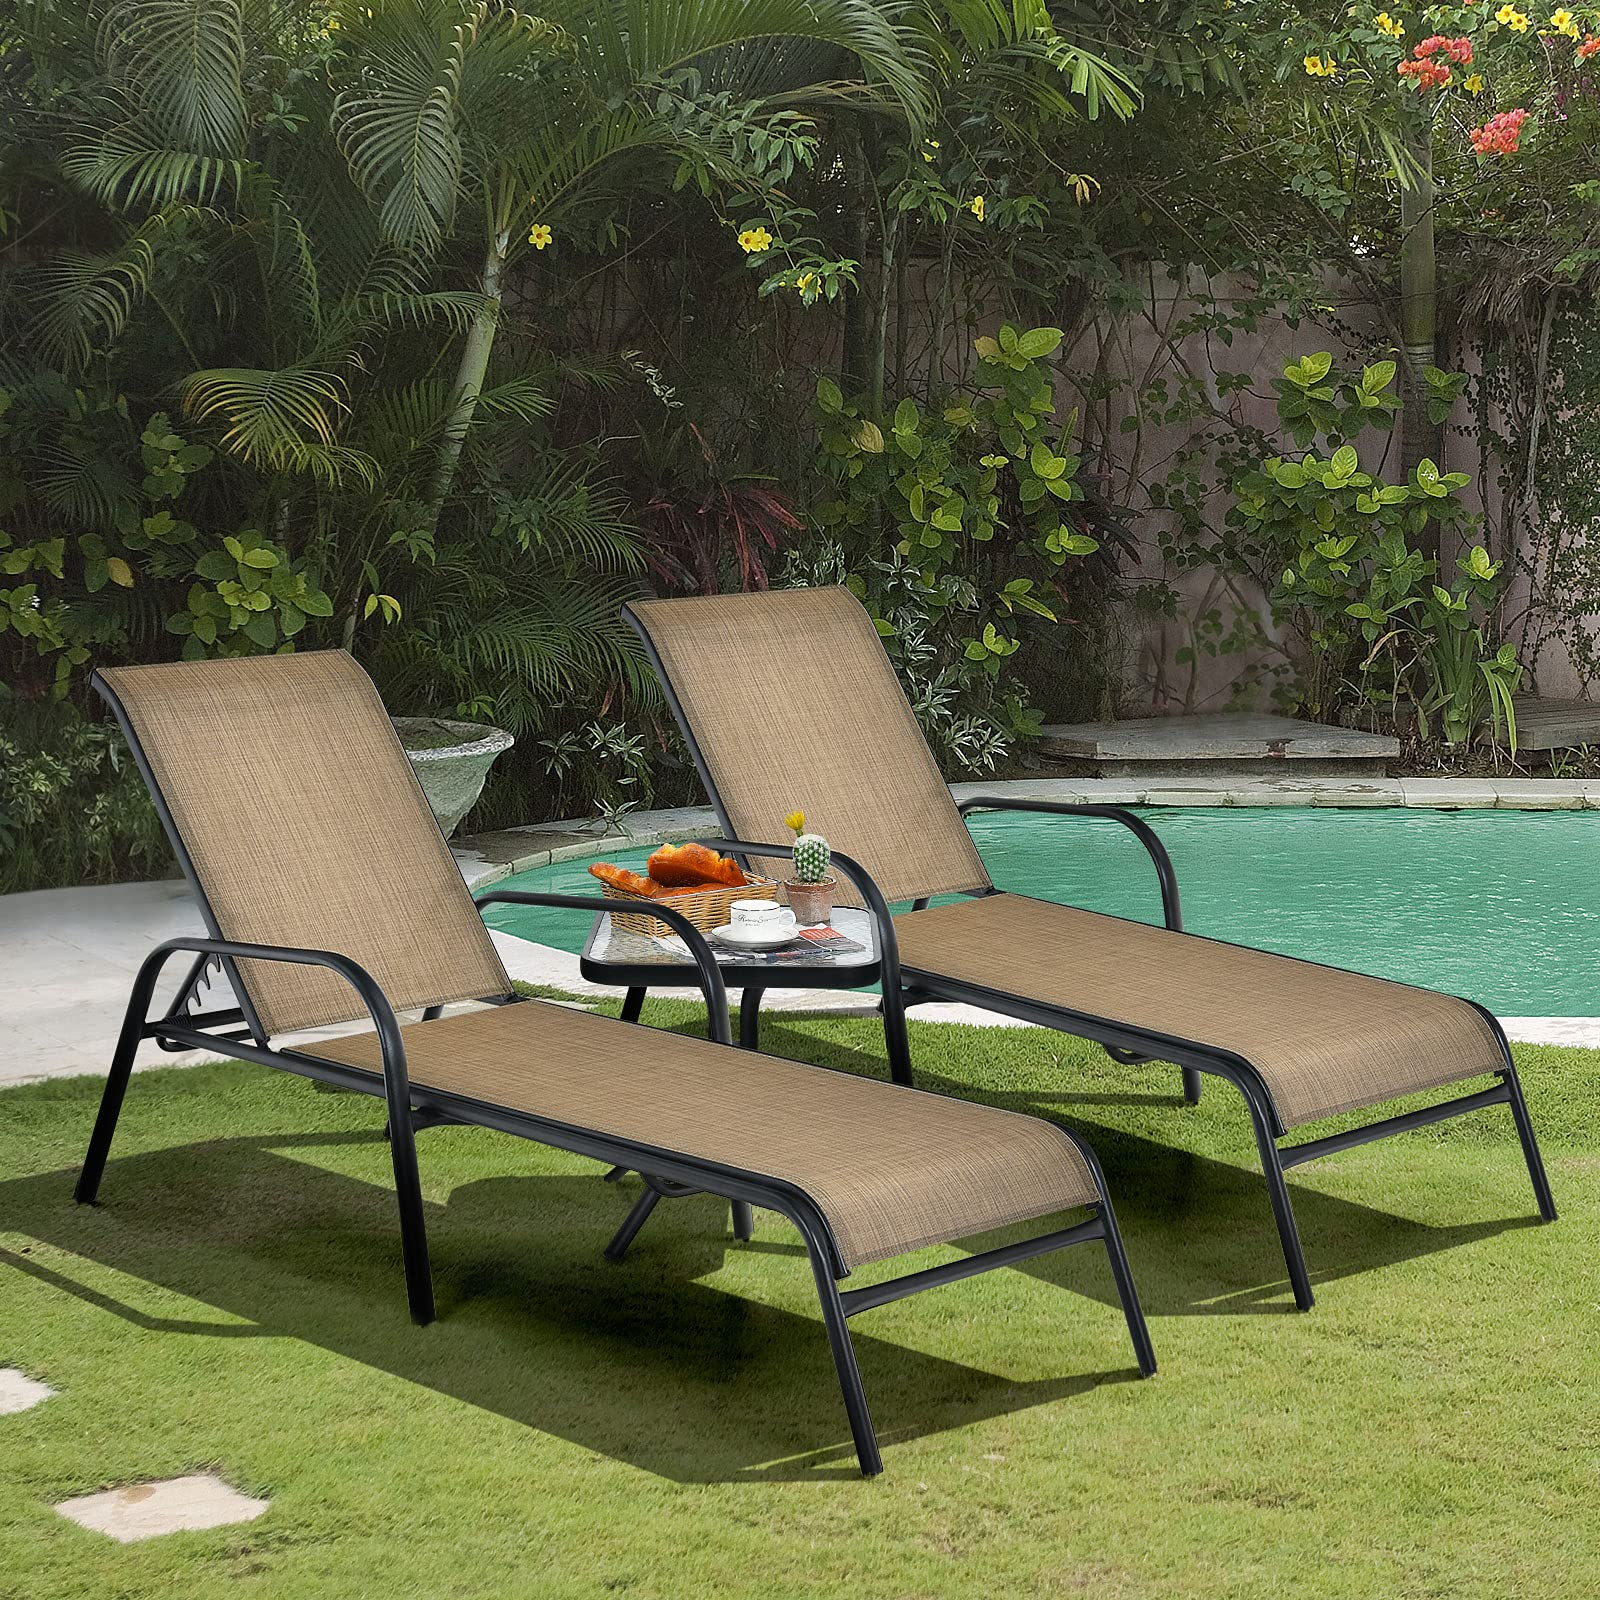 Giantex  Stackable Chaise Lounge Chair for Sunbathing, Poolside, Backyard, Garden Beach Lawn Chairs (Brown)